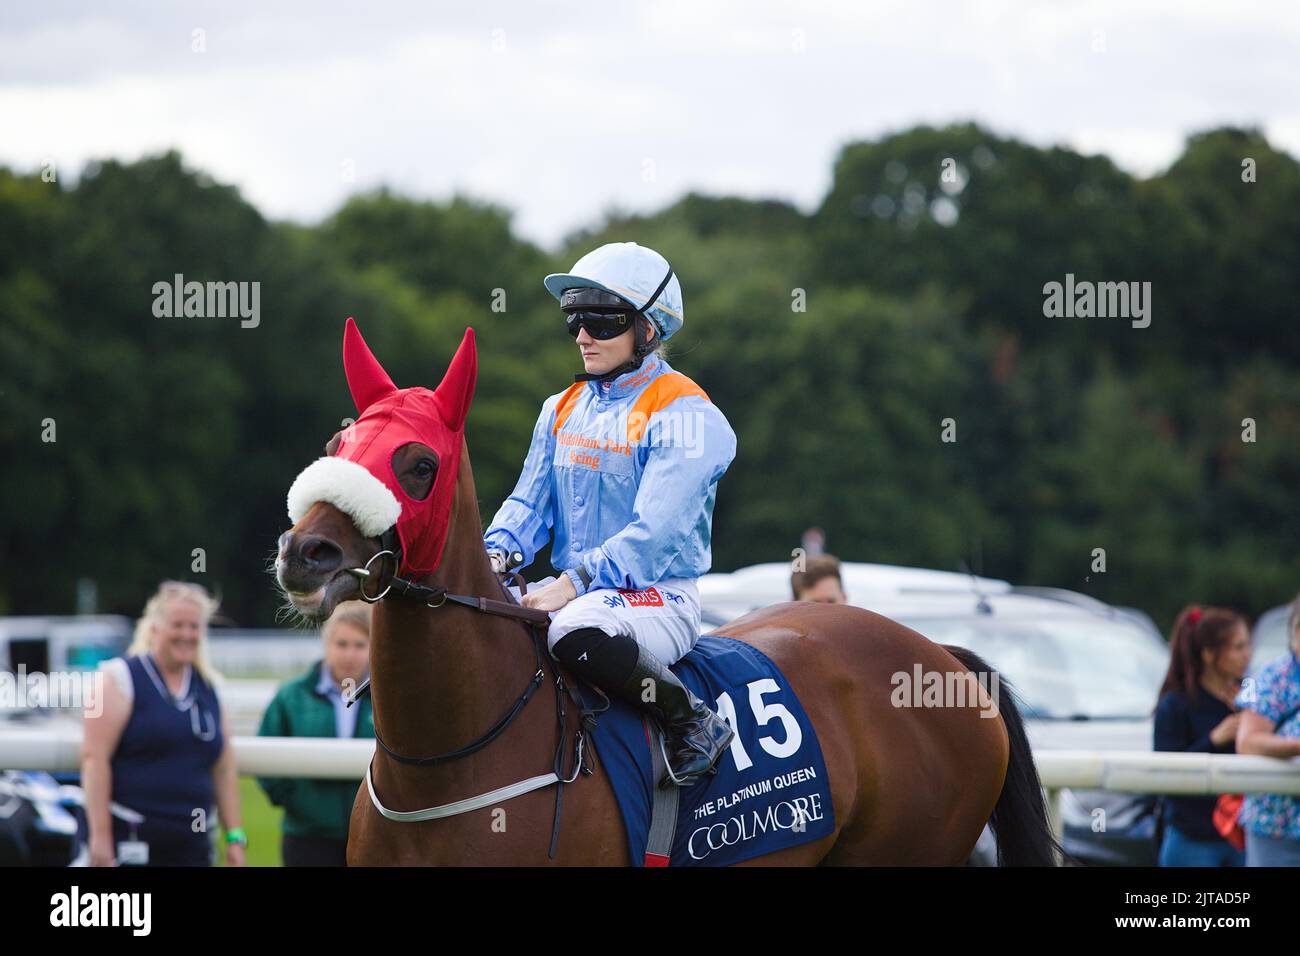 Jockey Hollie Doyle riding The Platinum Queen at York Races Ebor Festival. Stock Photo